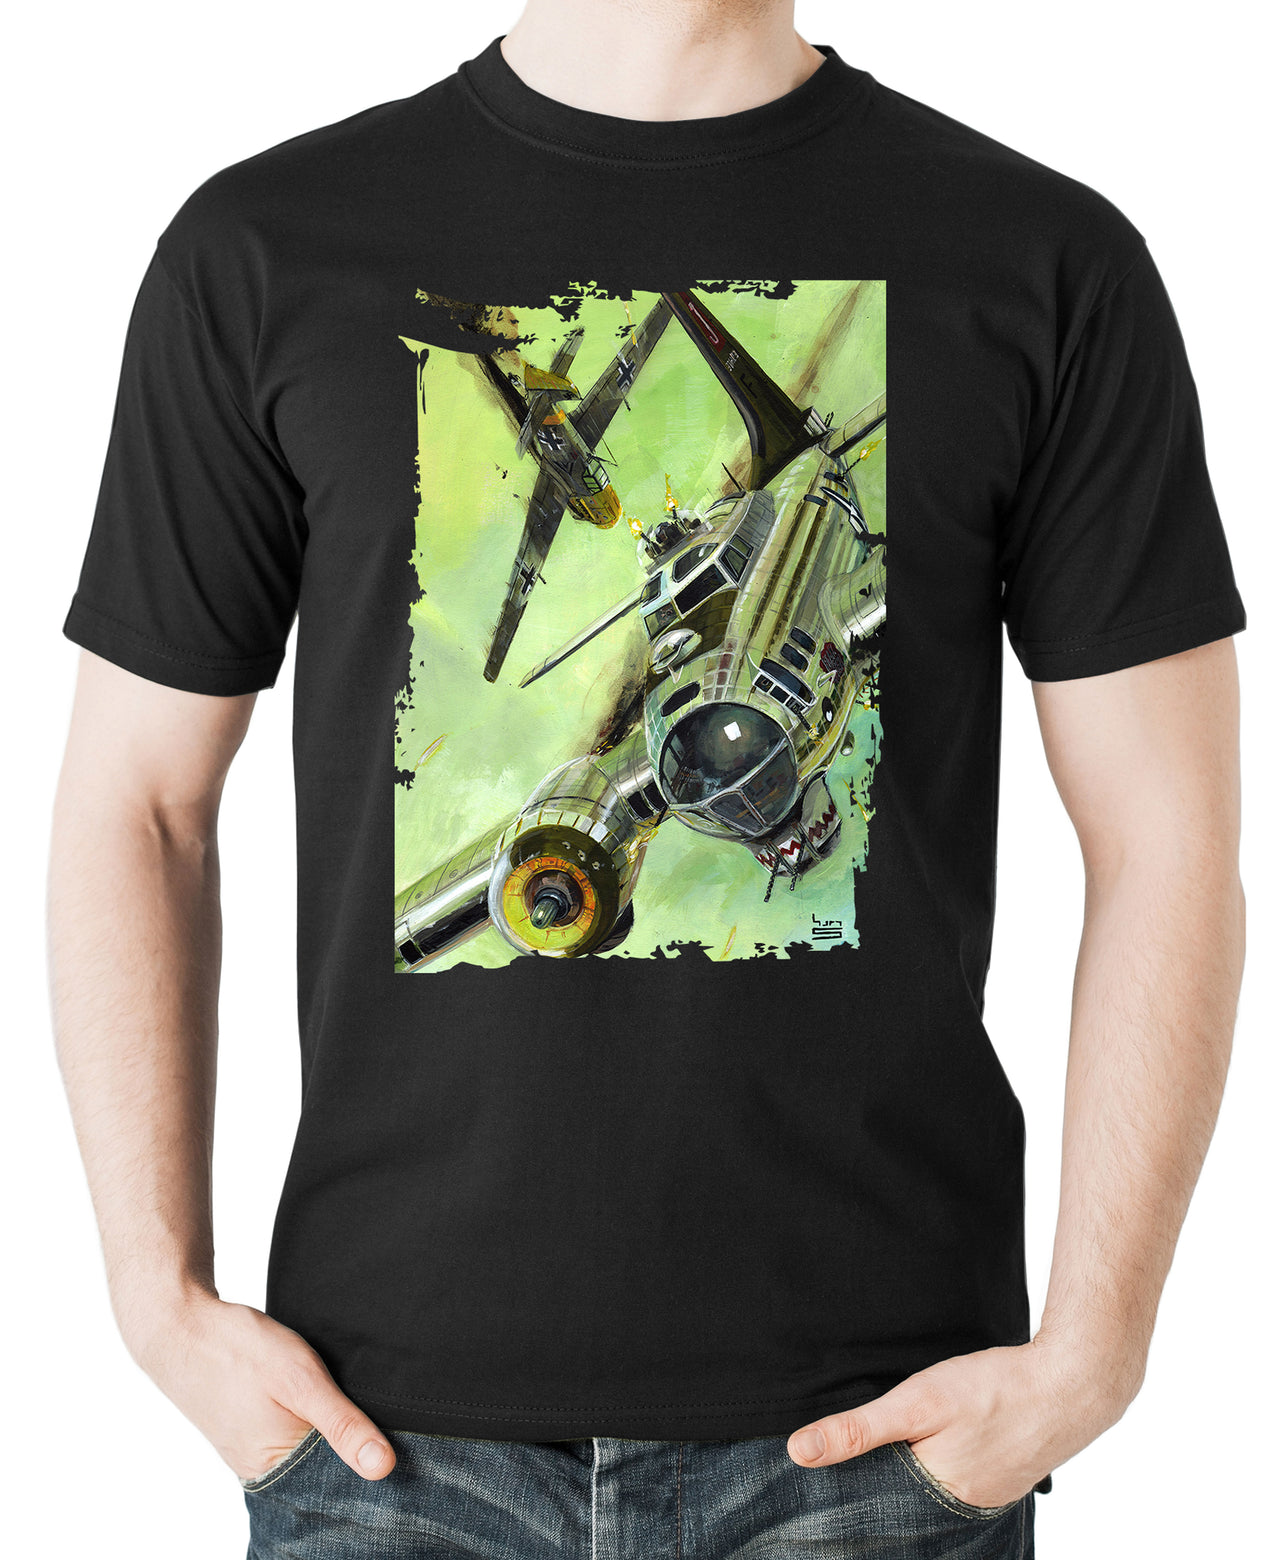 B-17 - 'One more closer to home' - T-shirt